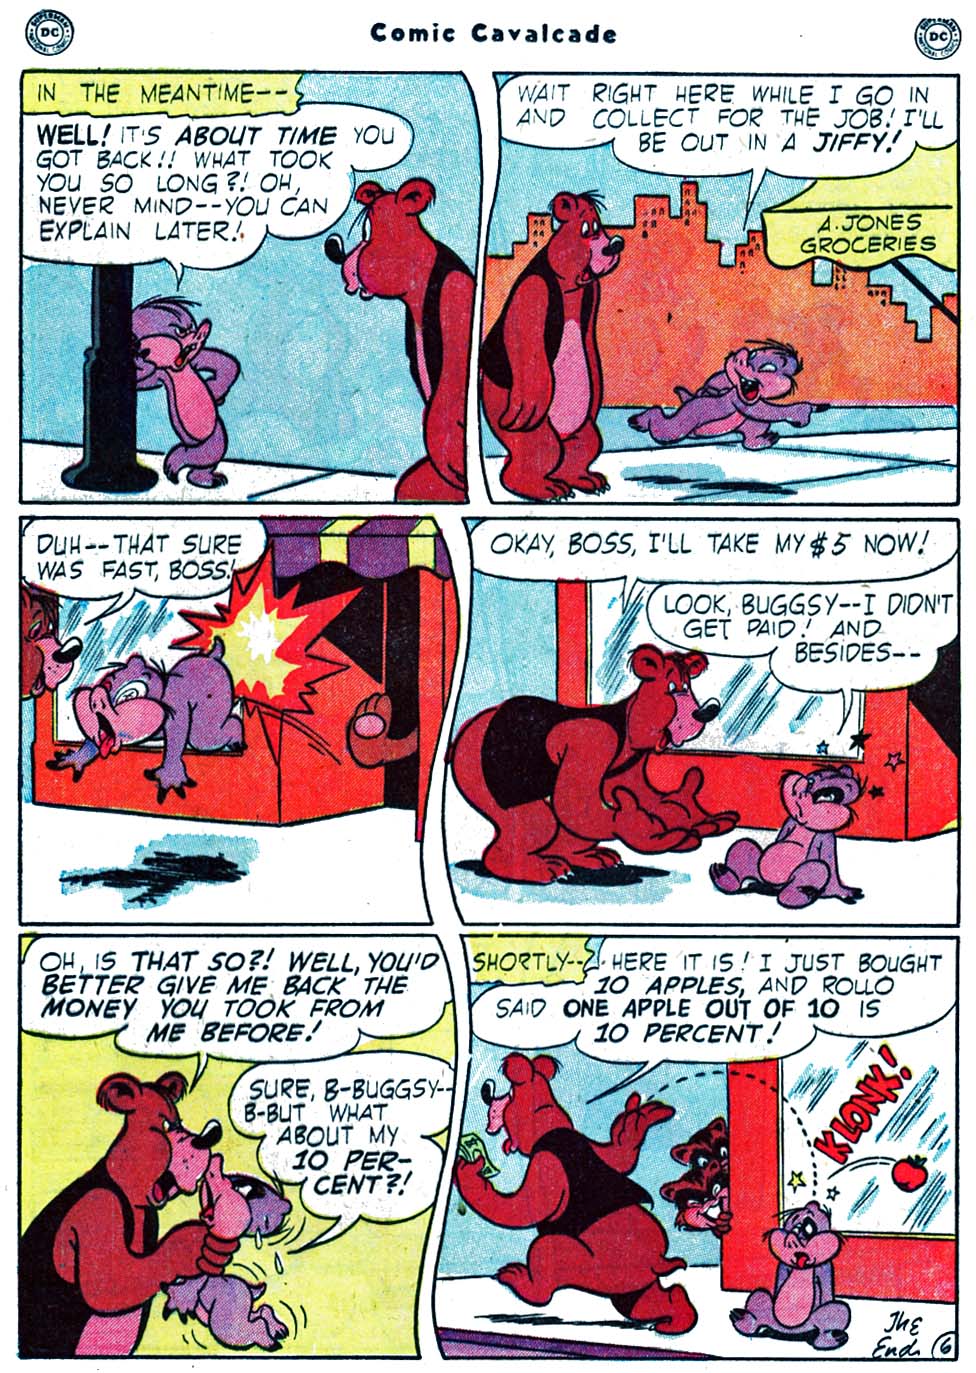 Comic Cavalcade issue 39 - Page 18